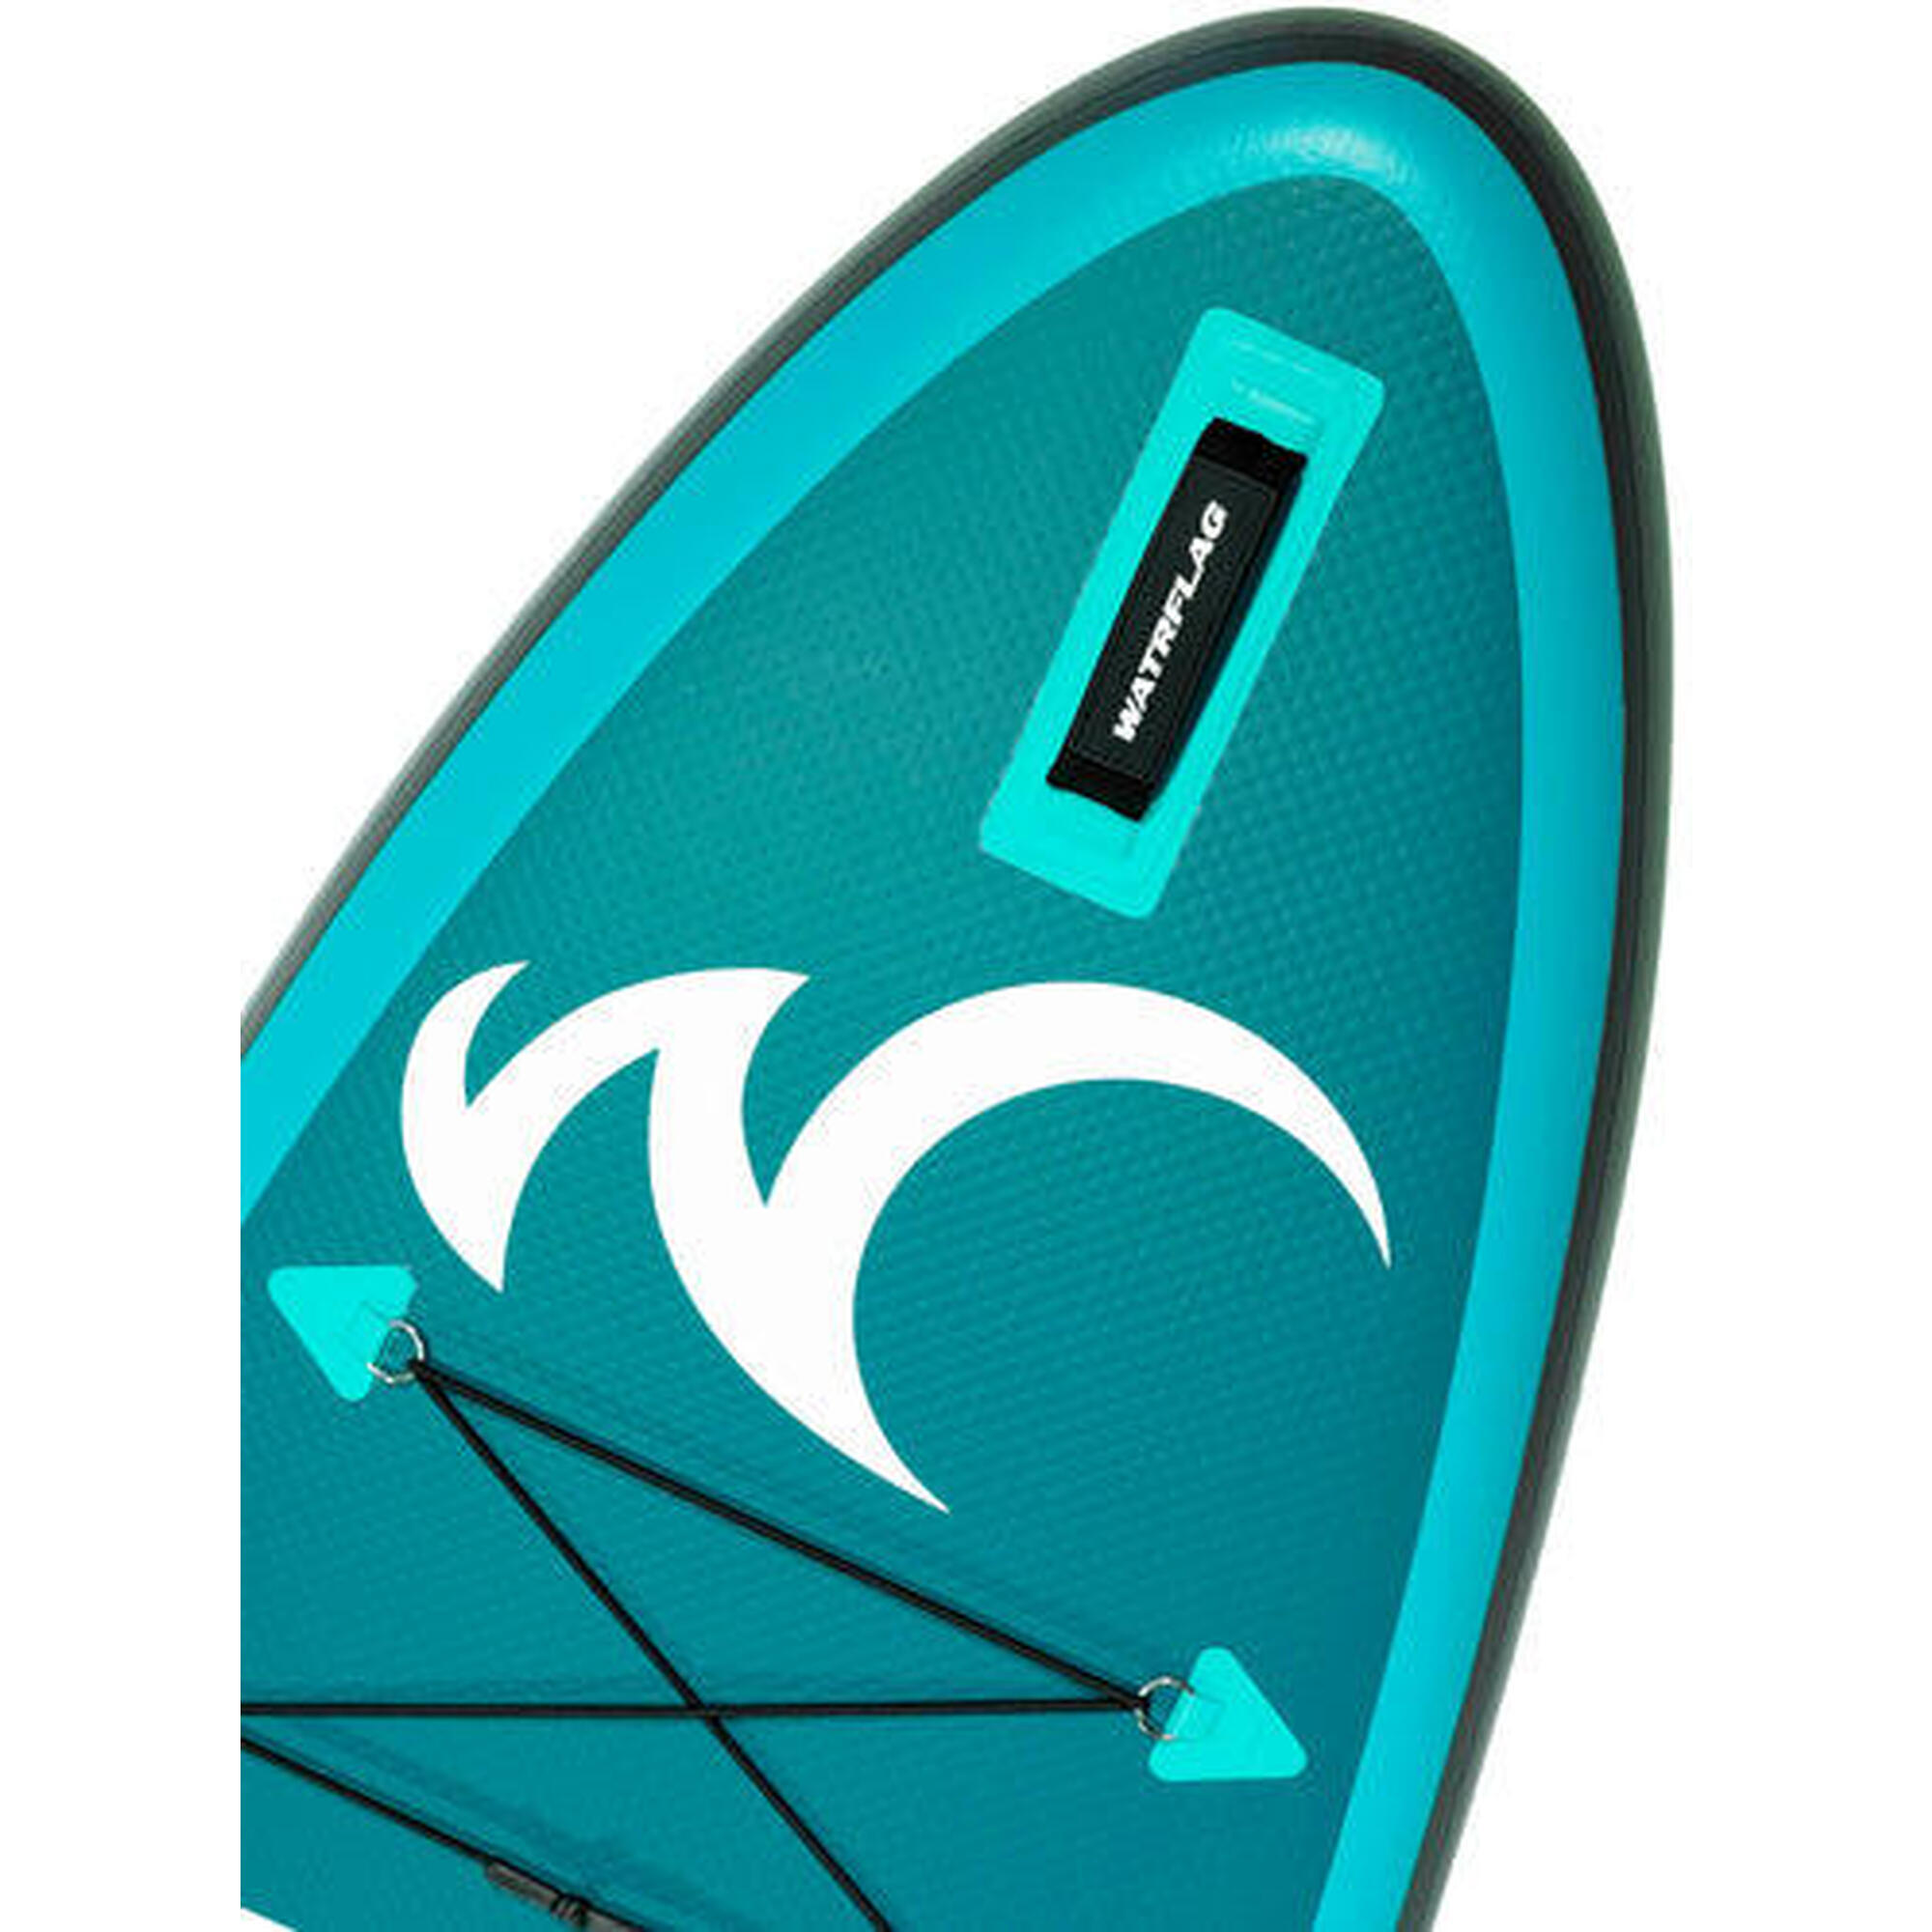 Stand Up Paddle Board gonfiabile Glide 10'6", 320 cm, SET+BORSA ASCIUTTA